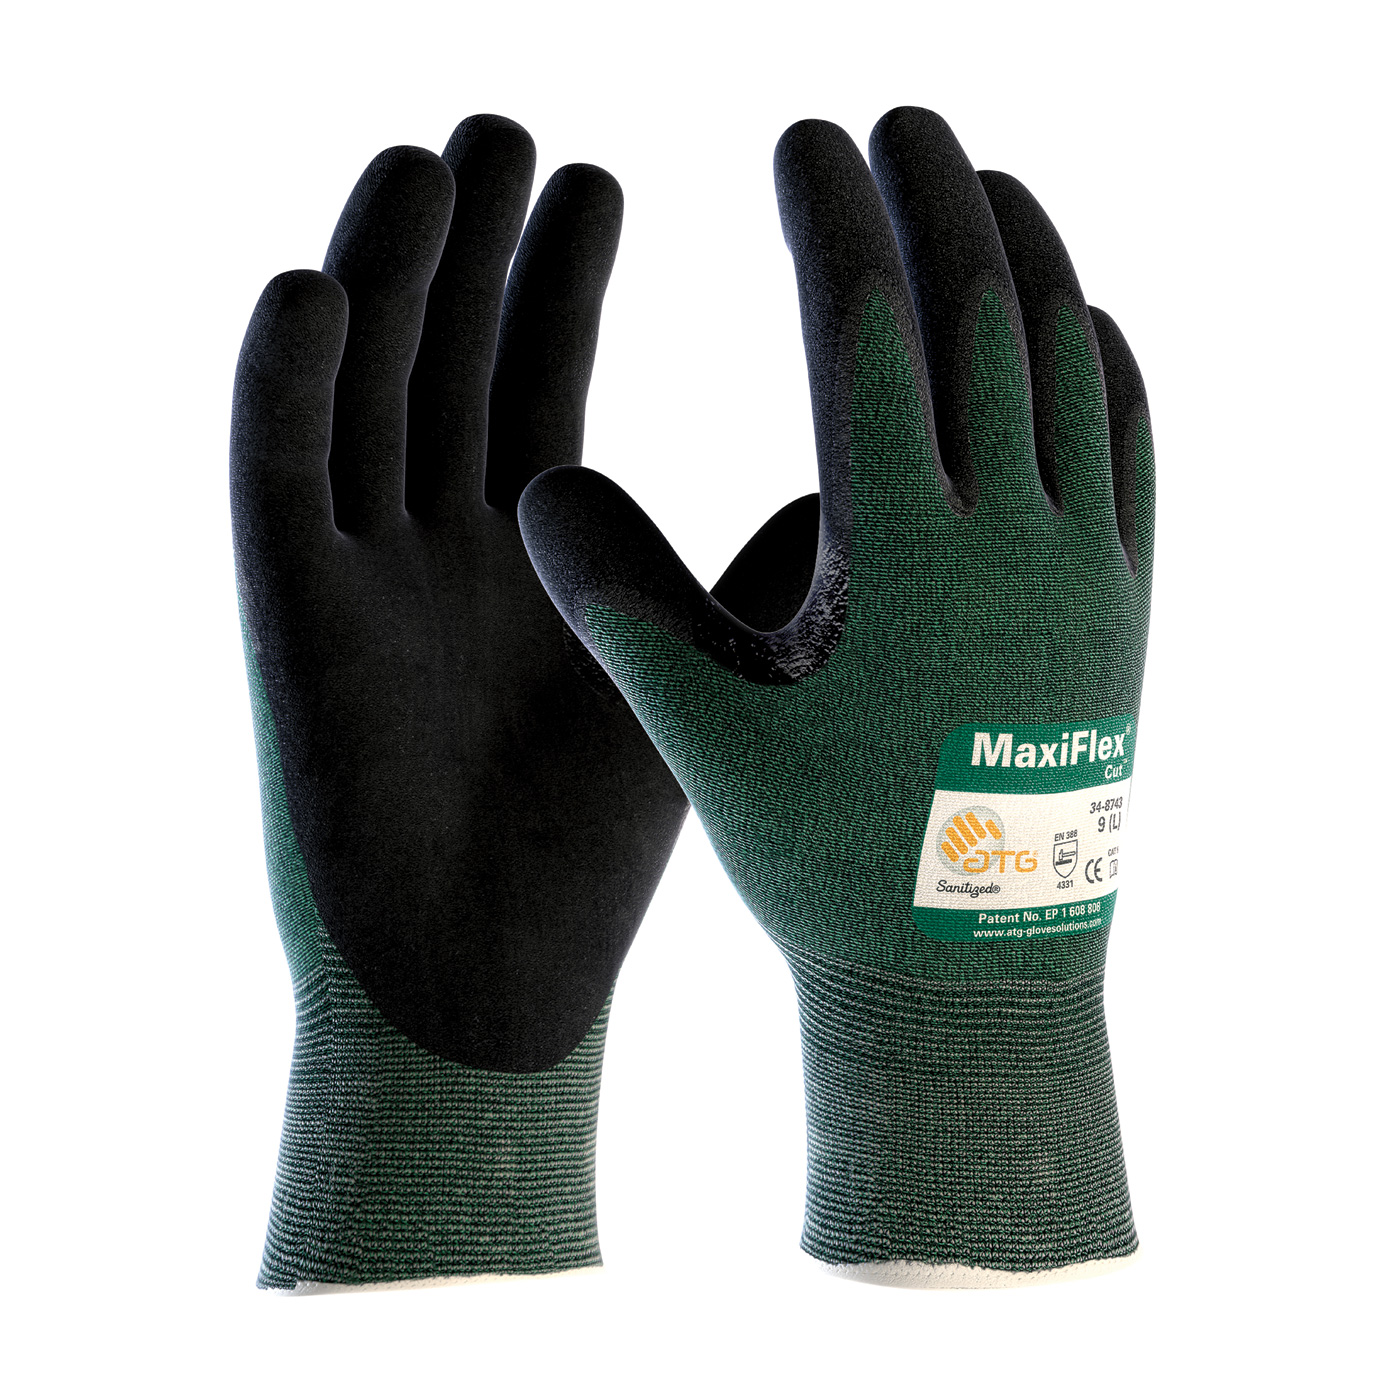 PIP 34-8743/M MaxiFlex Cut Seamless Knit Engineered Yarn Glove with Premium Nitrile Coated MicroFoam Grip on Palm & Fingers - Medium PID-34 8743 M